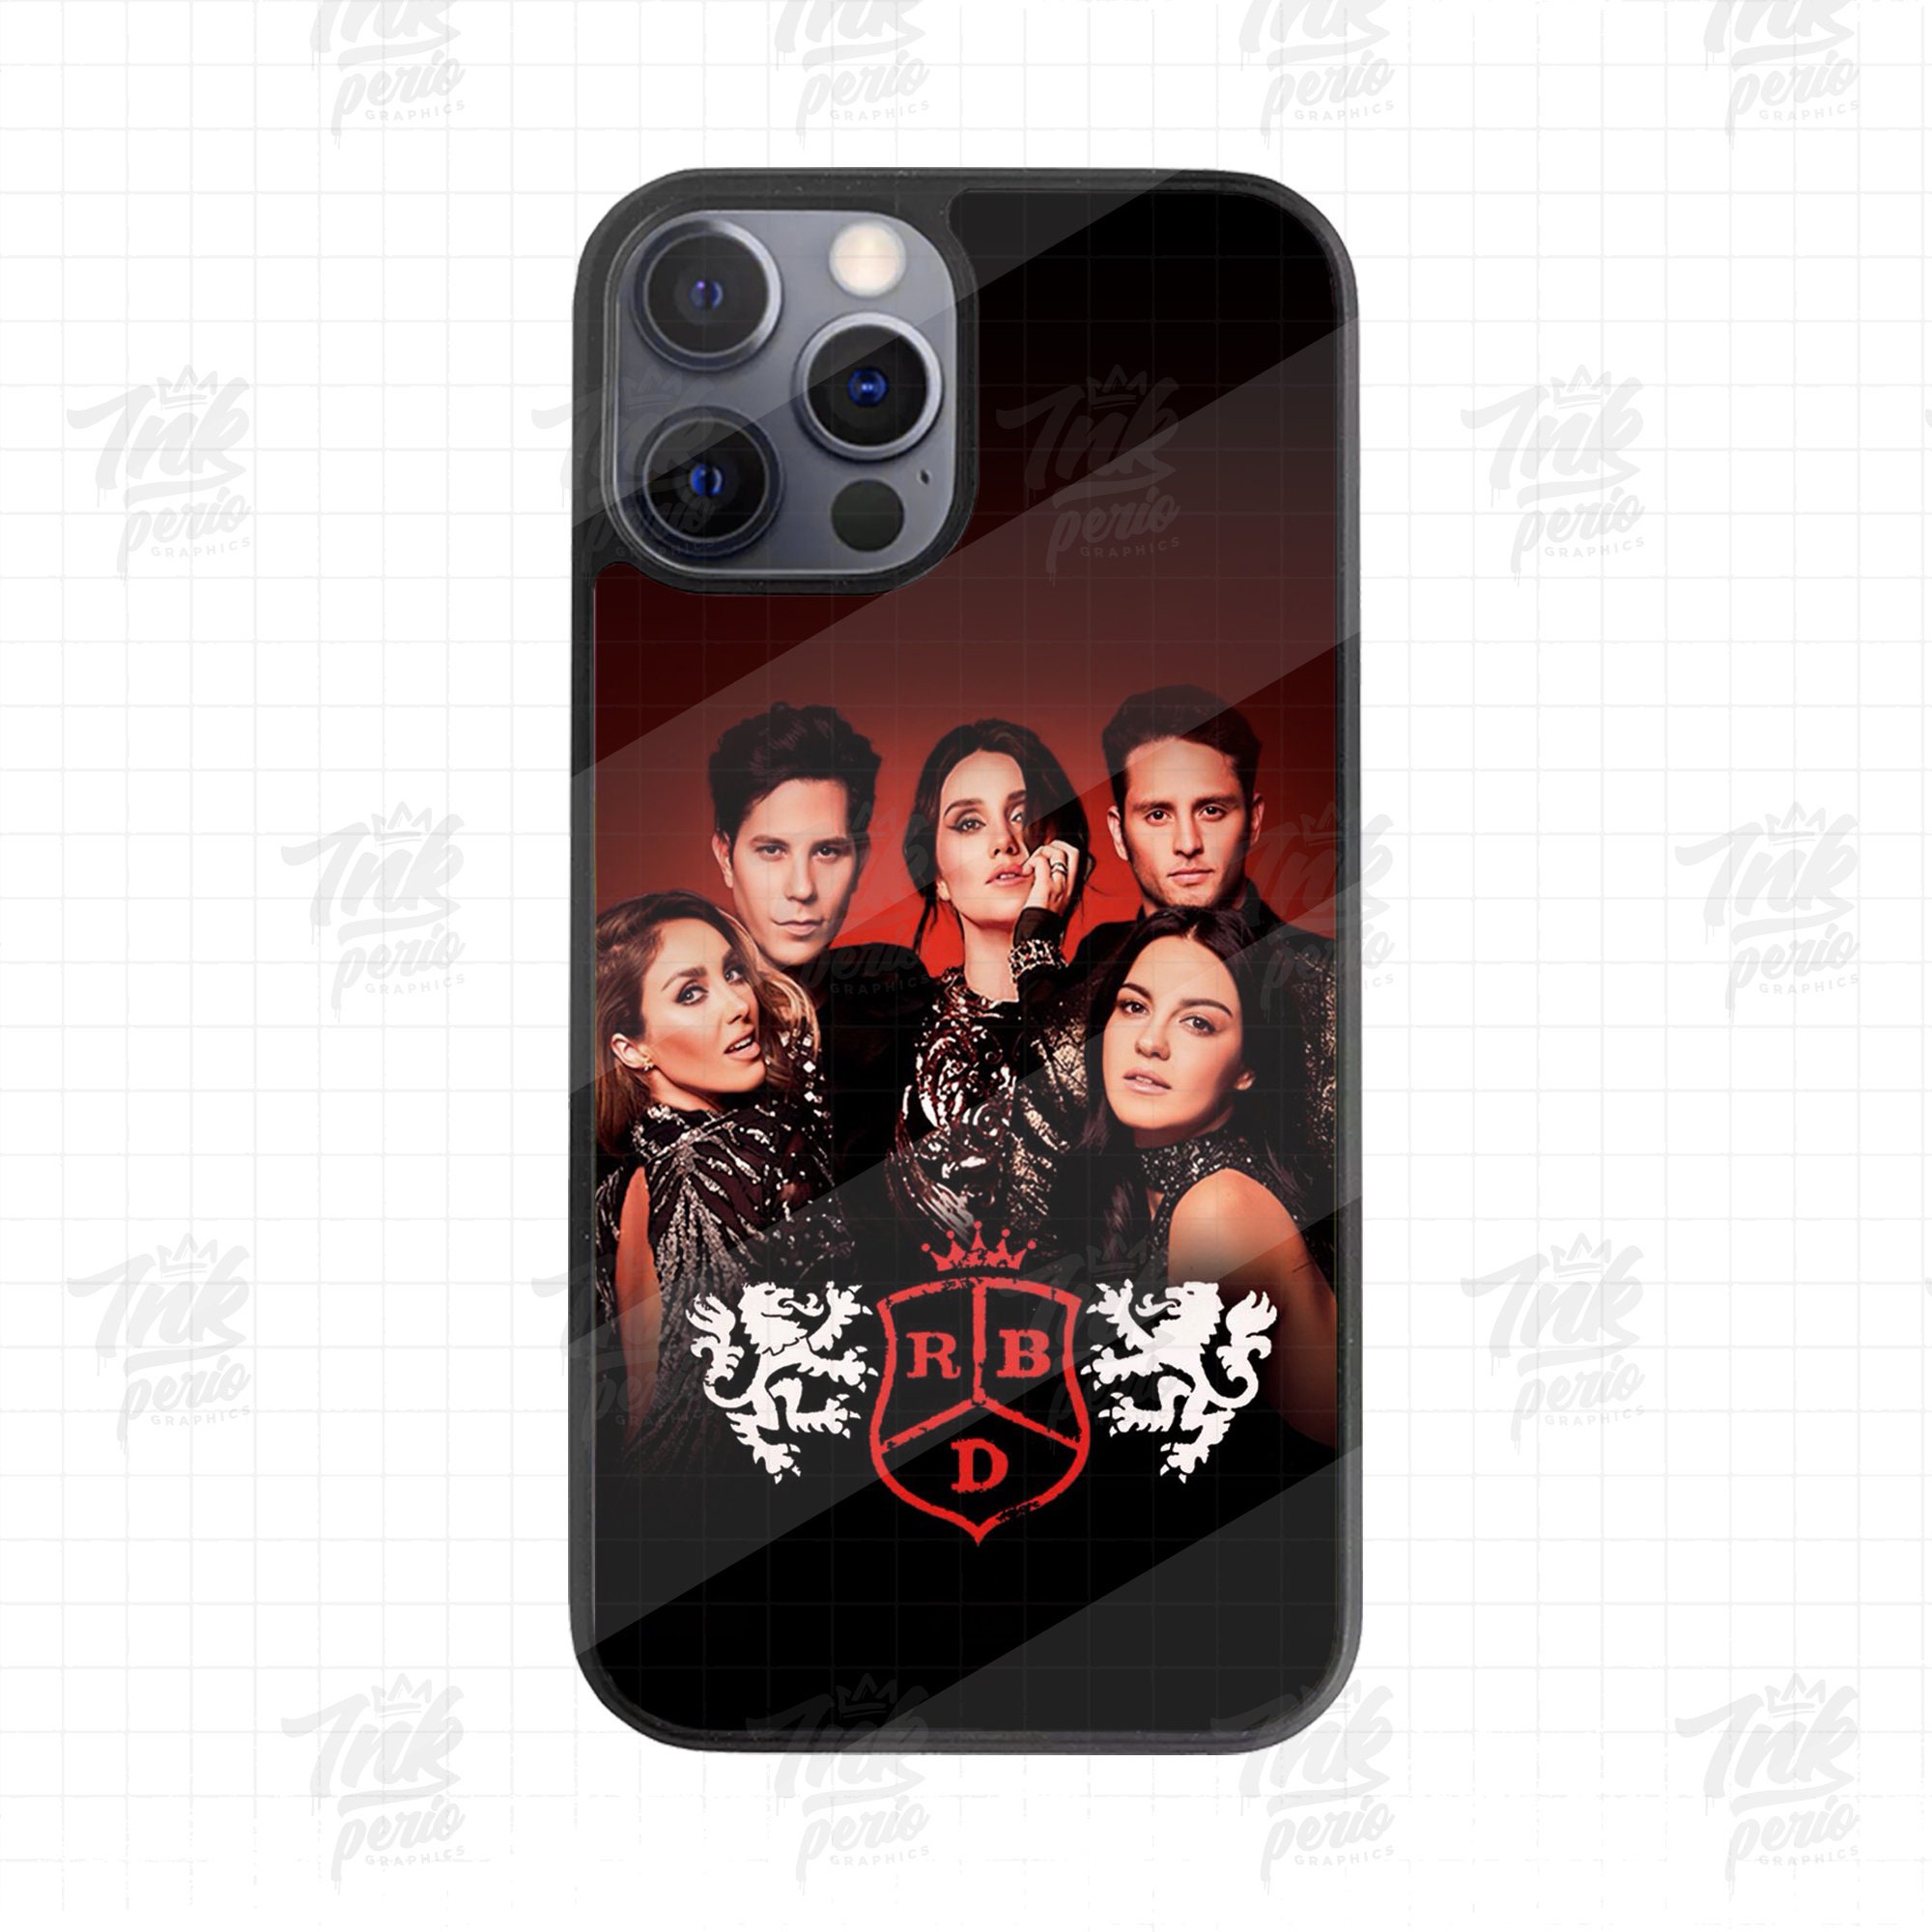 Rebelde Phone Case - Rebelde Iphone Case - RBD Tour Phone case